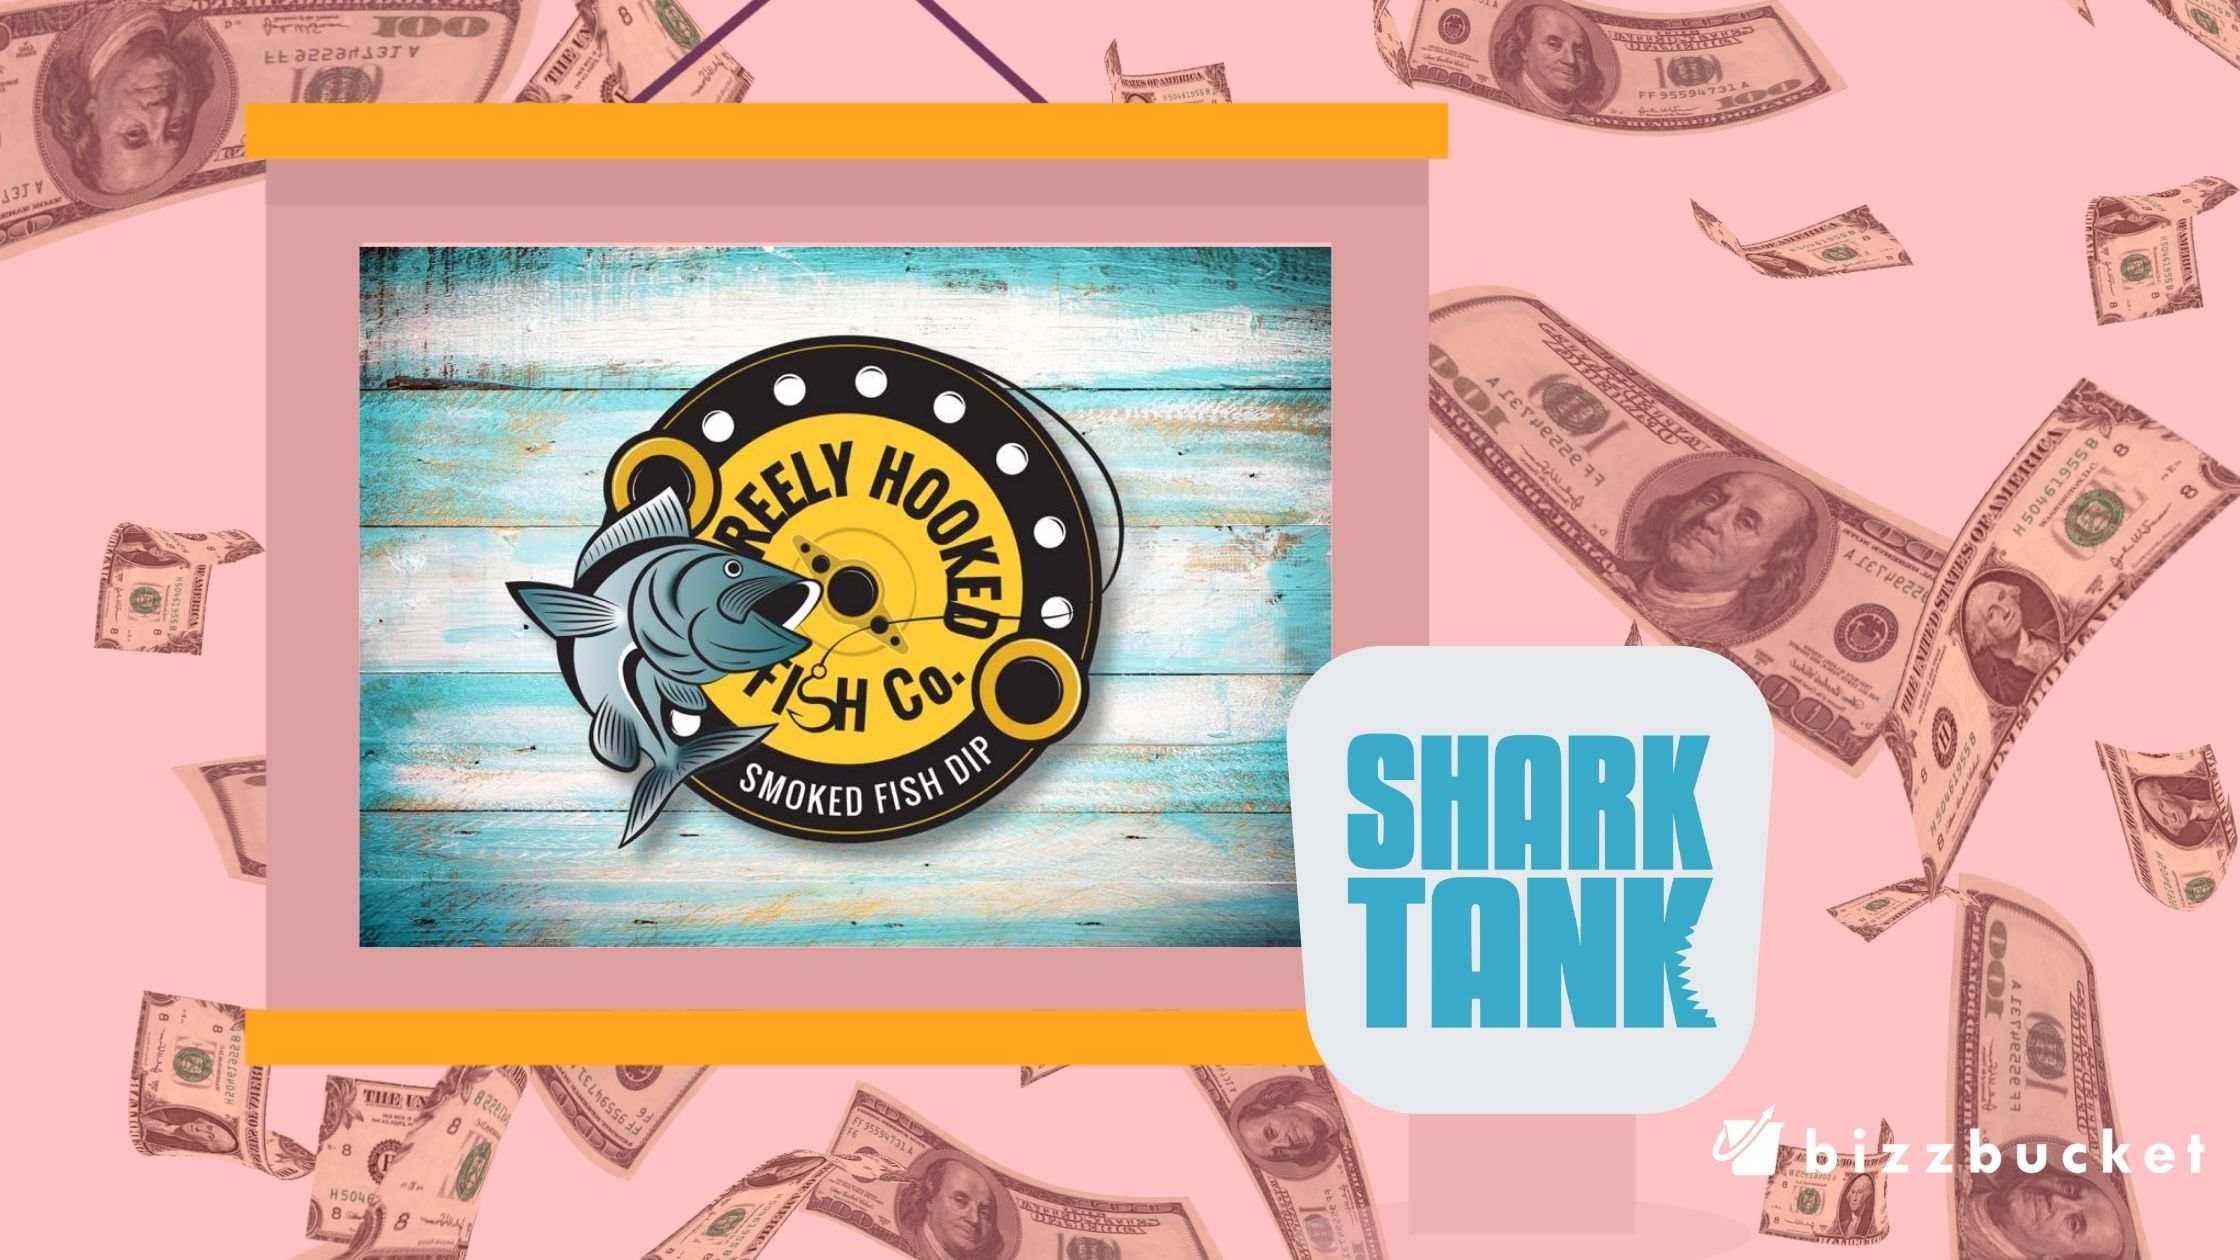 Reely Hooked Fish shark tank update